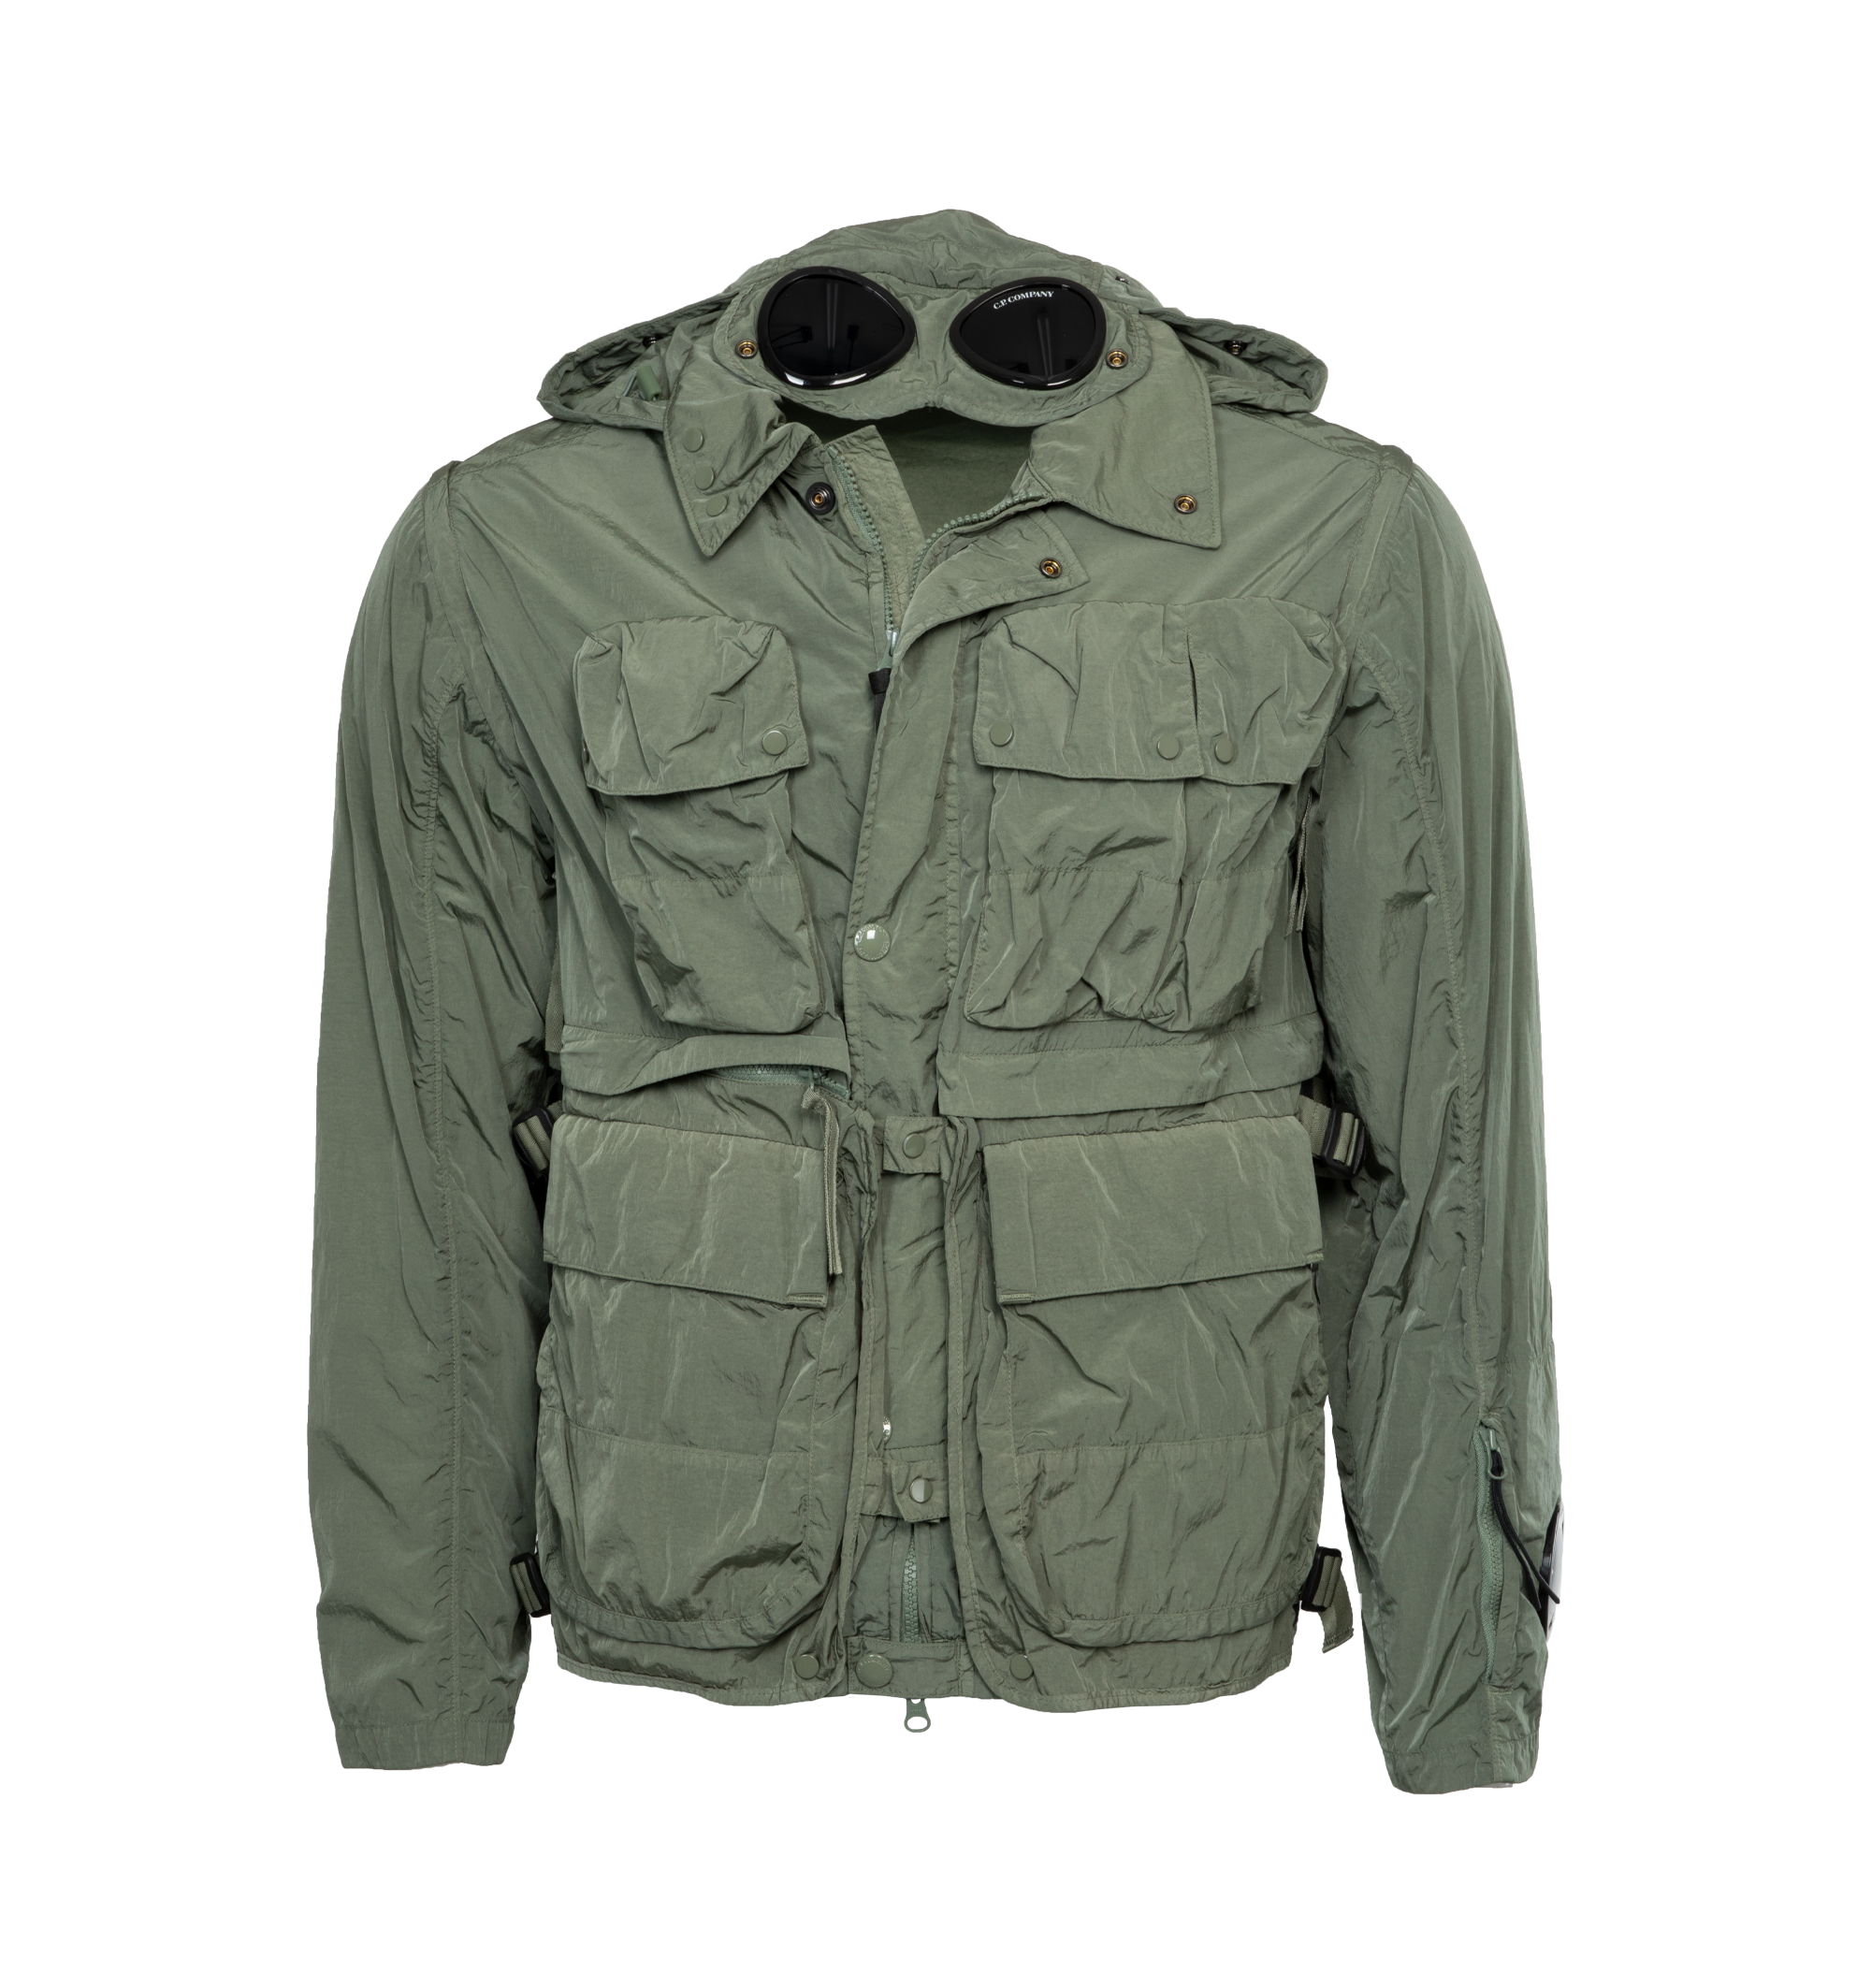 Men's Utility Jacket by Wardrobe By Me Patterns - Sew Sew